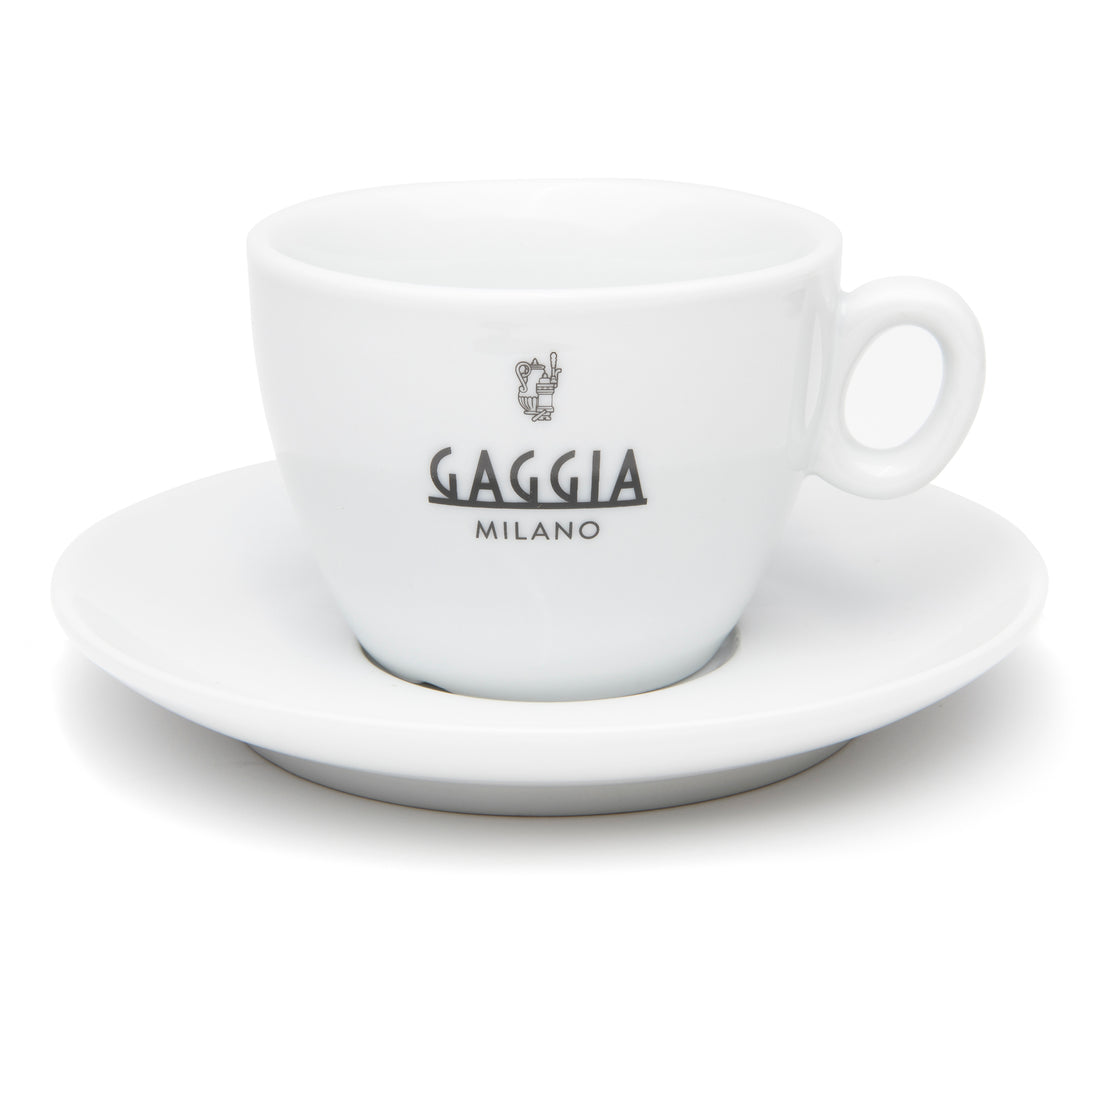 Gaggia Set of 4 Cappuccino Cups